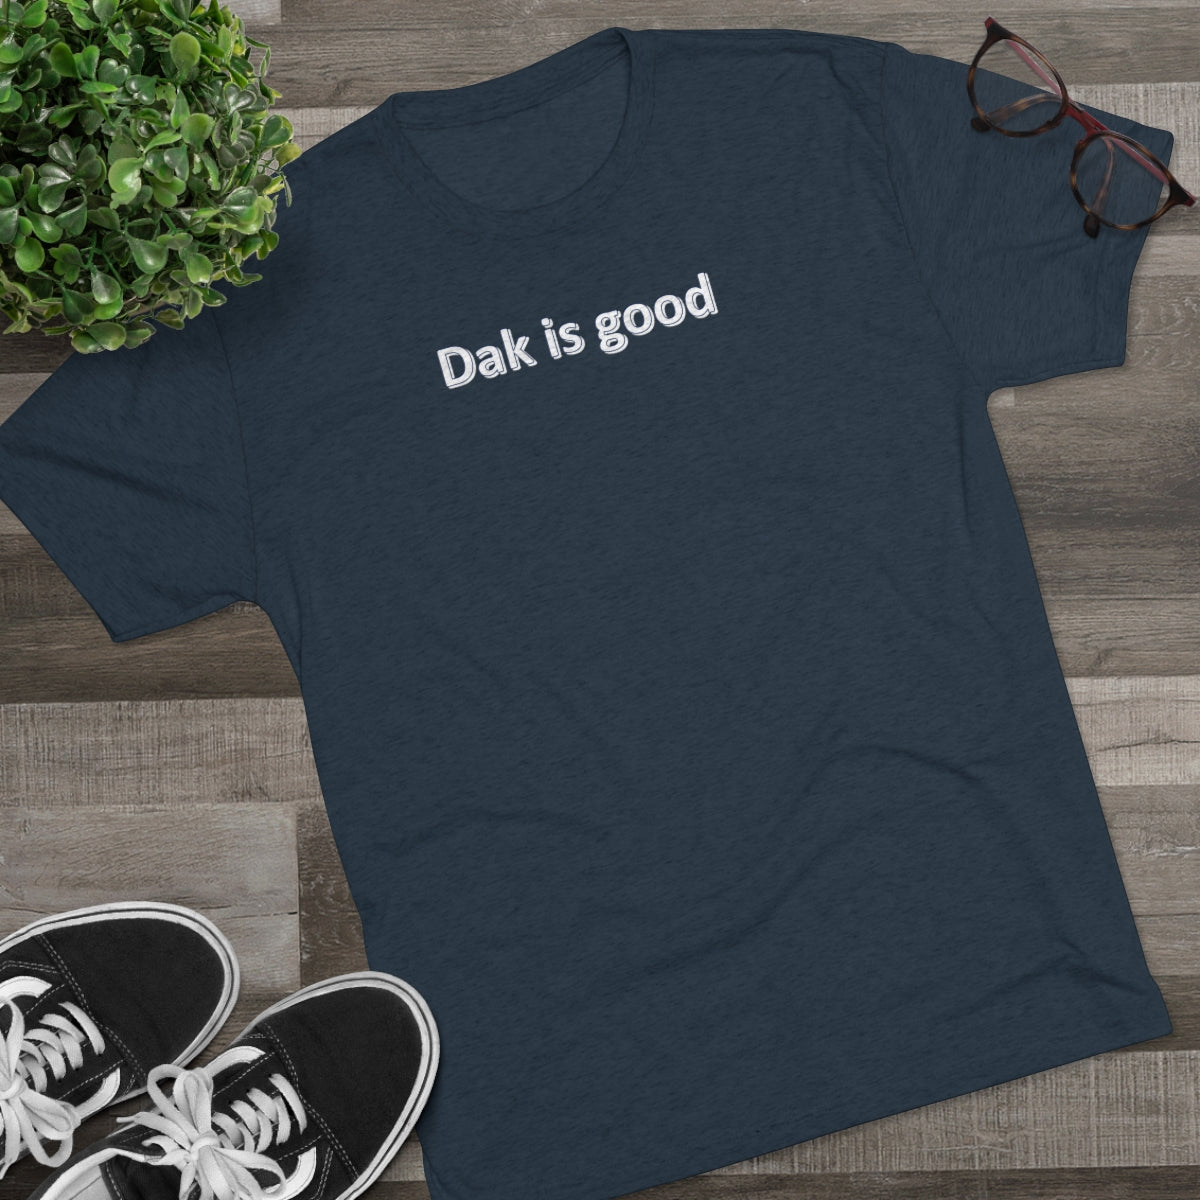 Dak is good T-shirt - IsGoodBrand